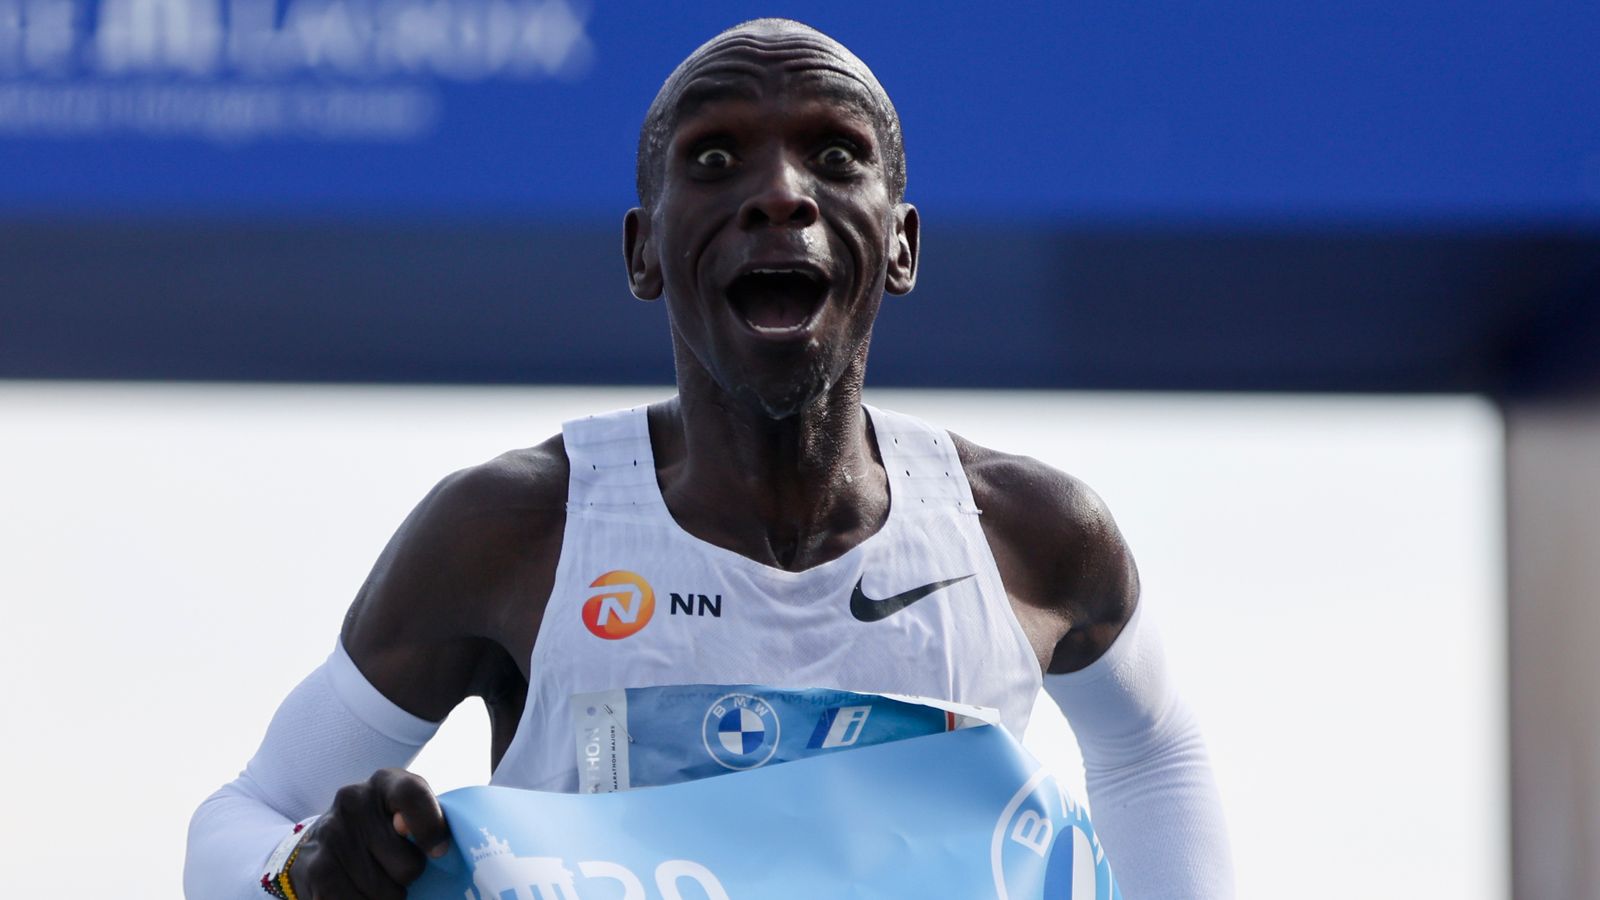 Eliud Kipchoge breaks his own world-record Marathon time in Berlin | News | Sky Sports thumbnail